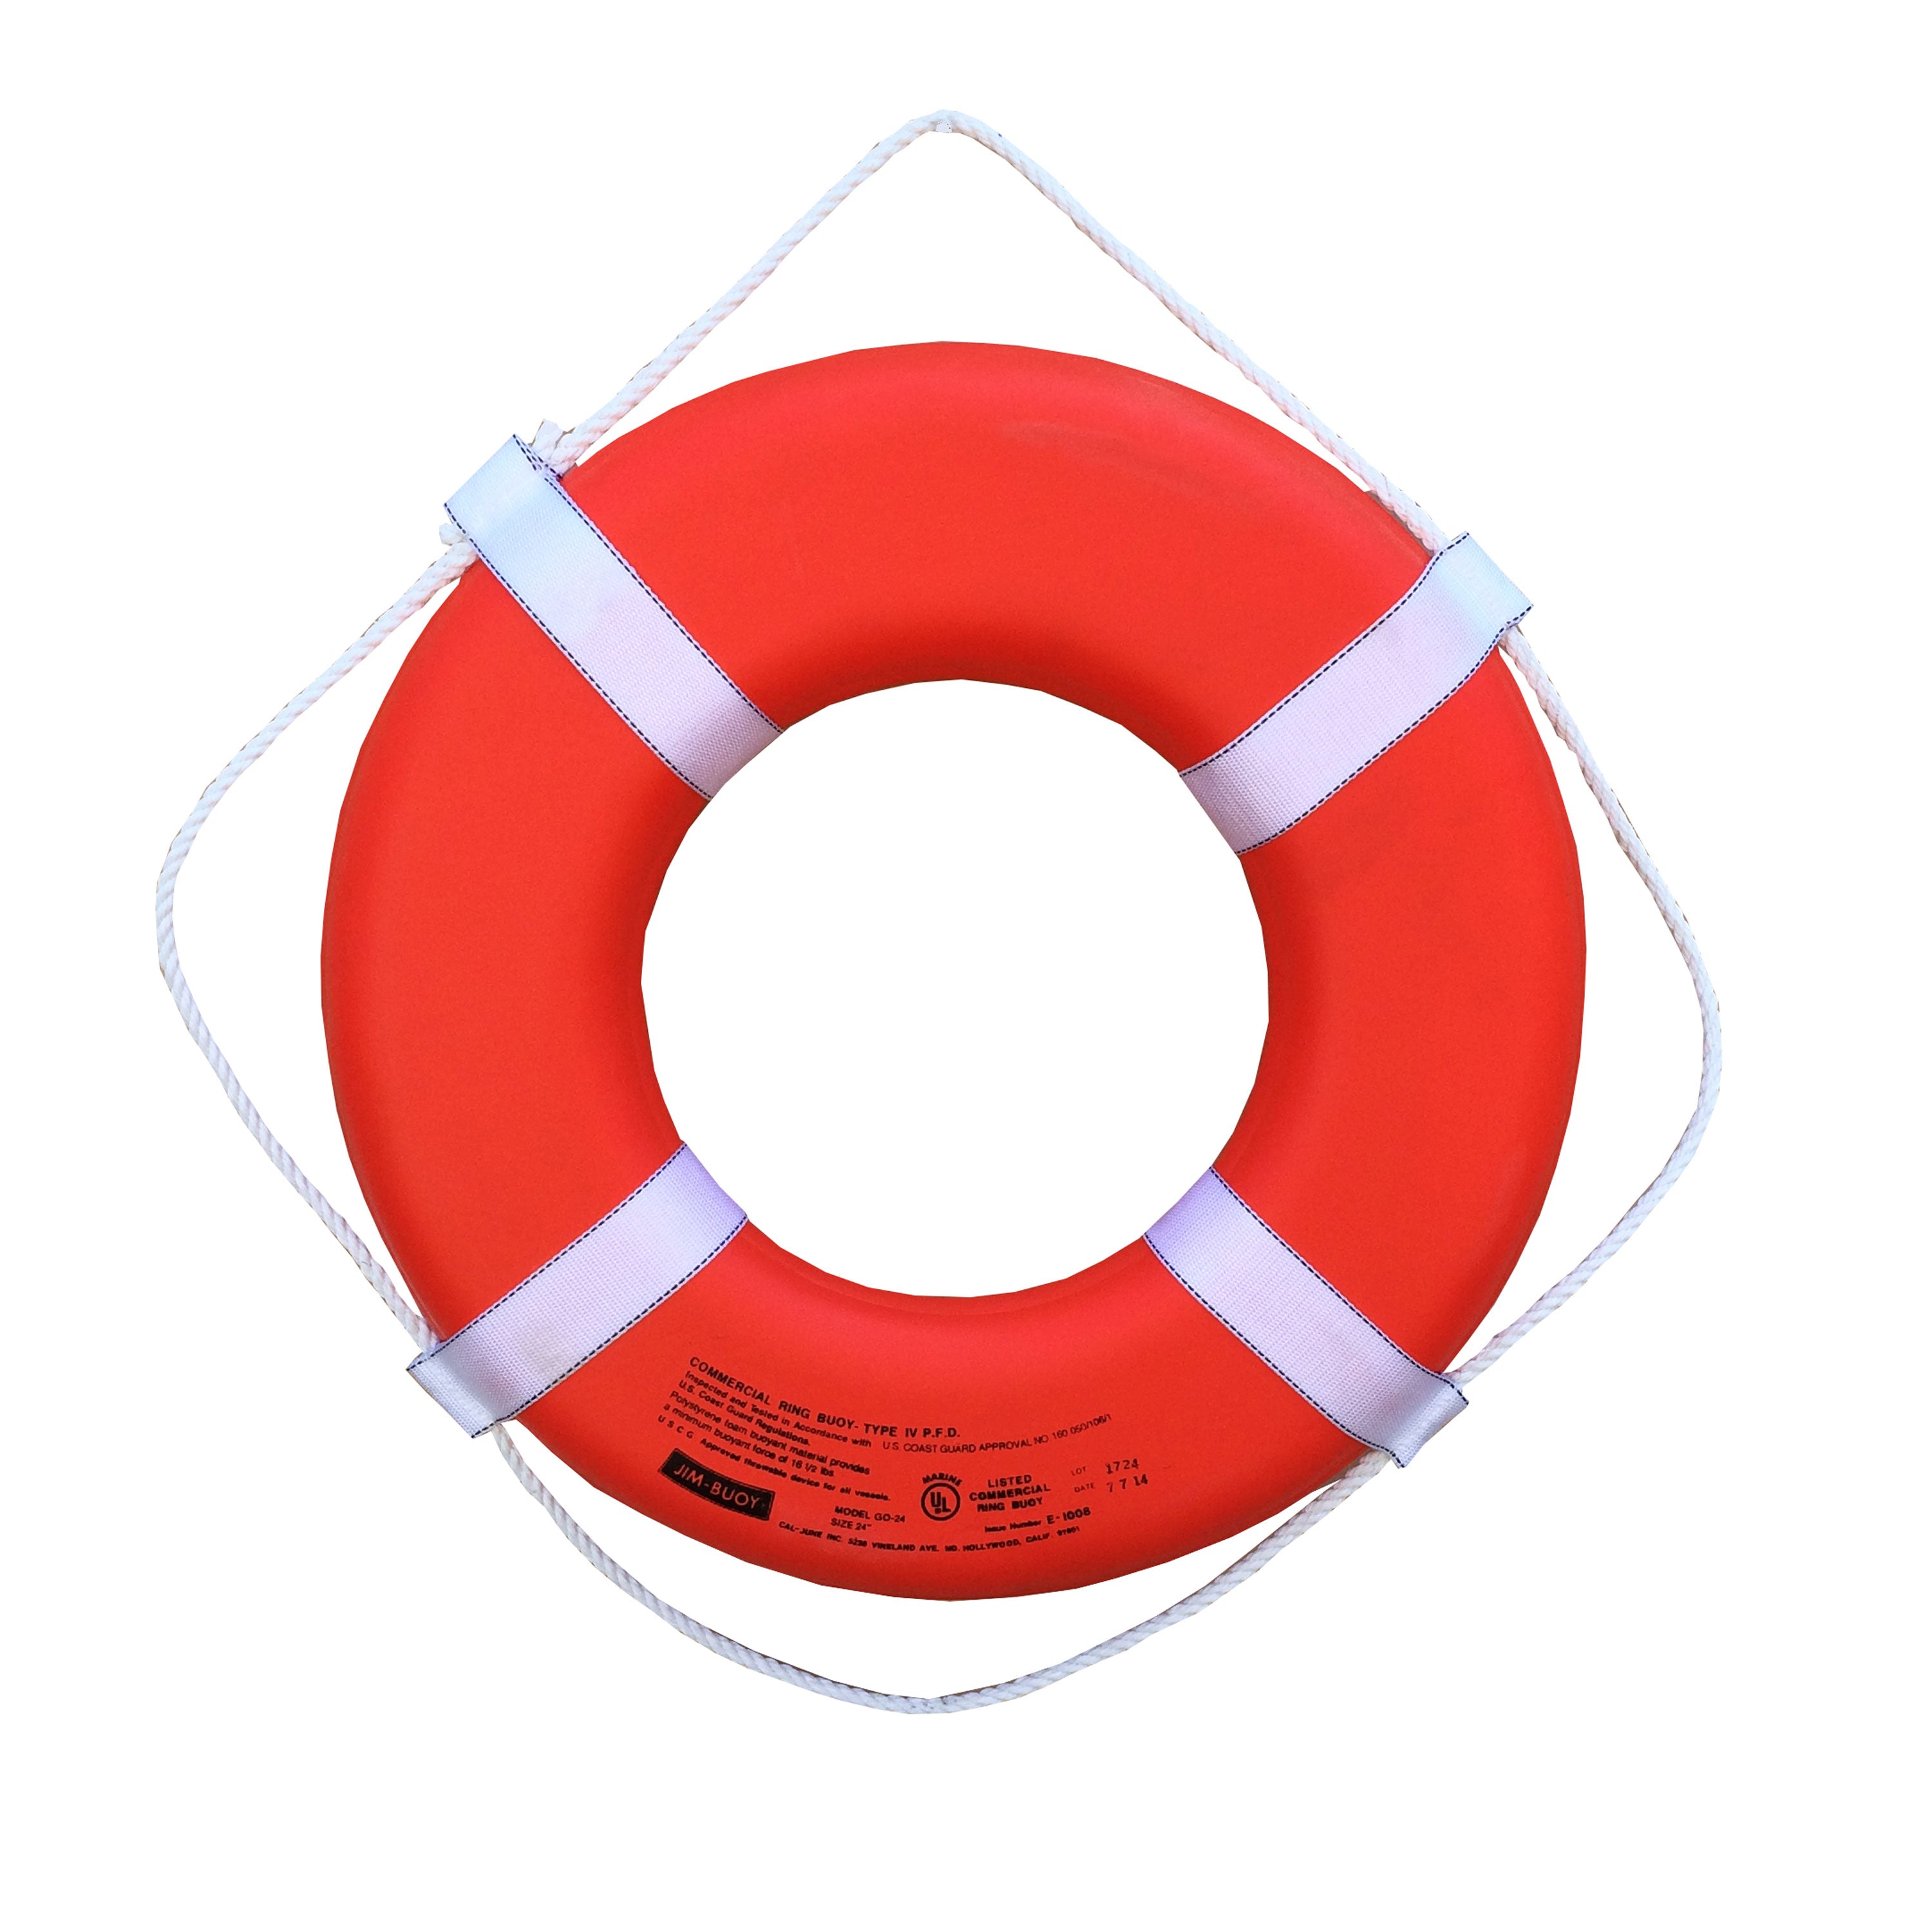 Jim-Buoy GO-20 G-Series Life Ring with Web Straps - 20", Orange